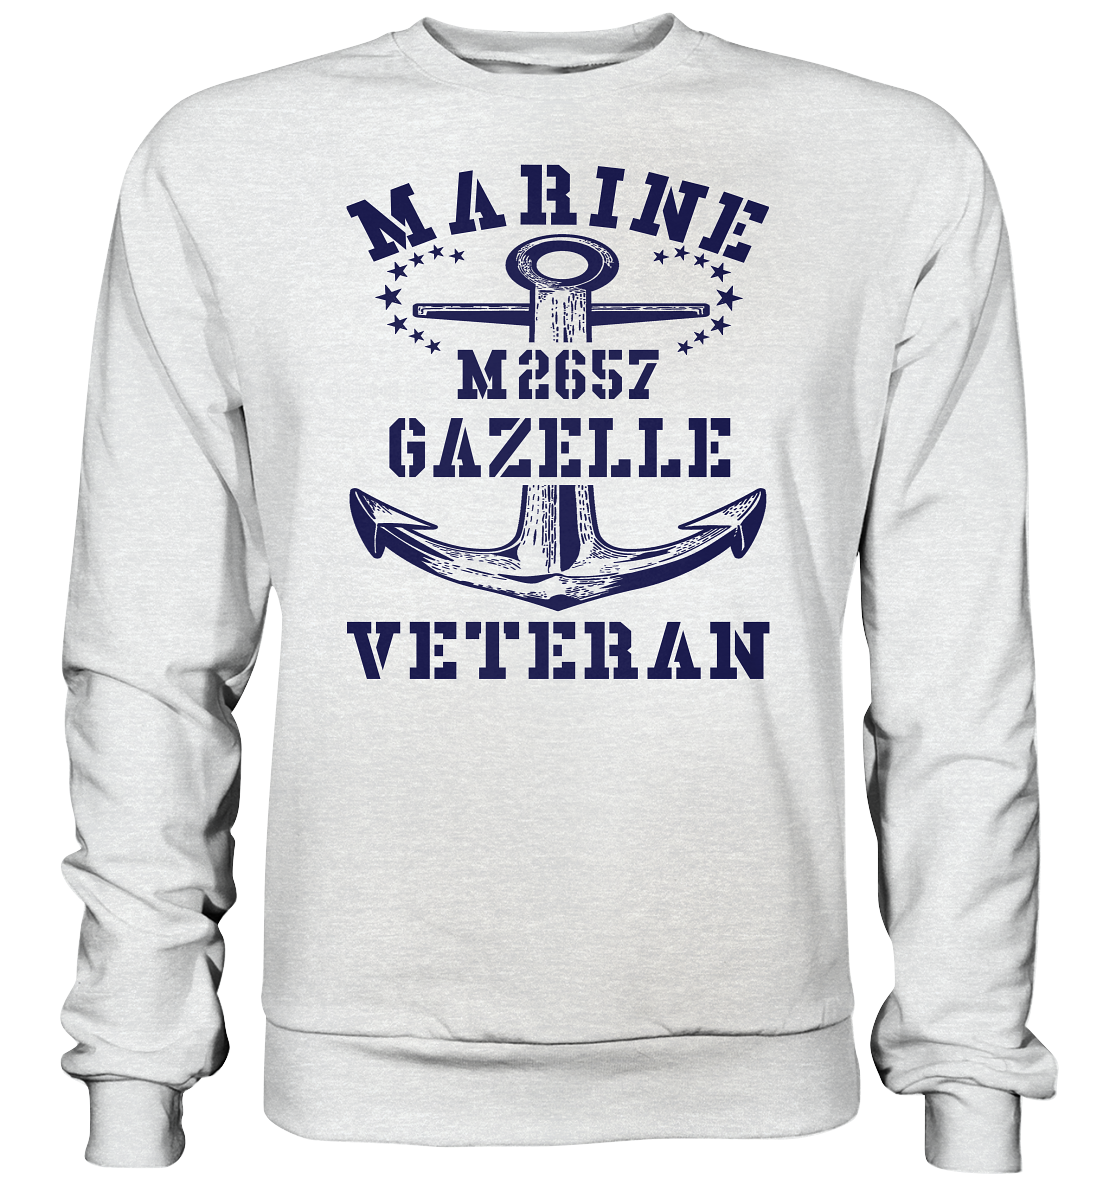 BiMi M2657 GAZELLE Marine Veteran - Premium Sweatshirt